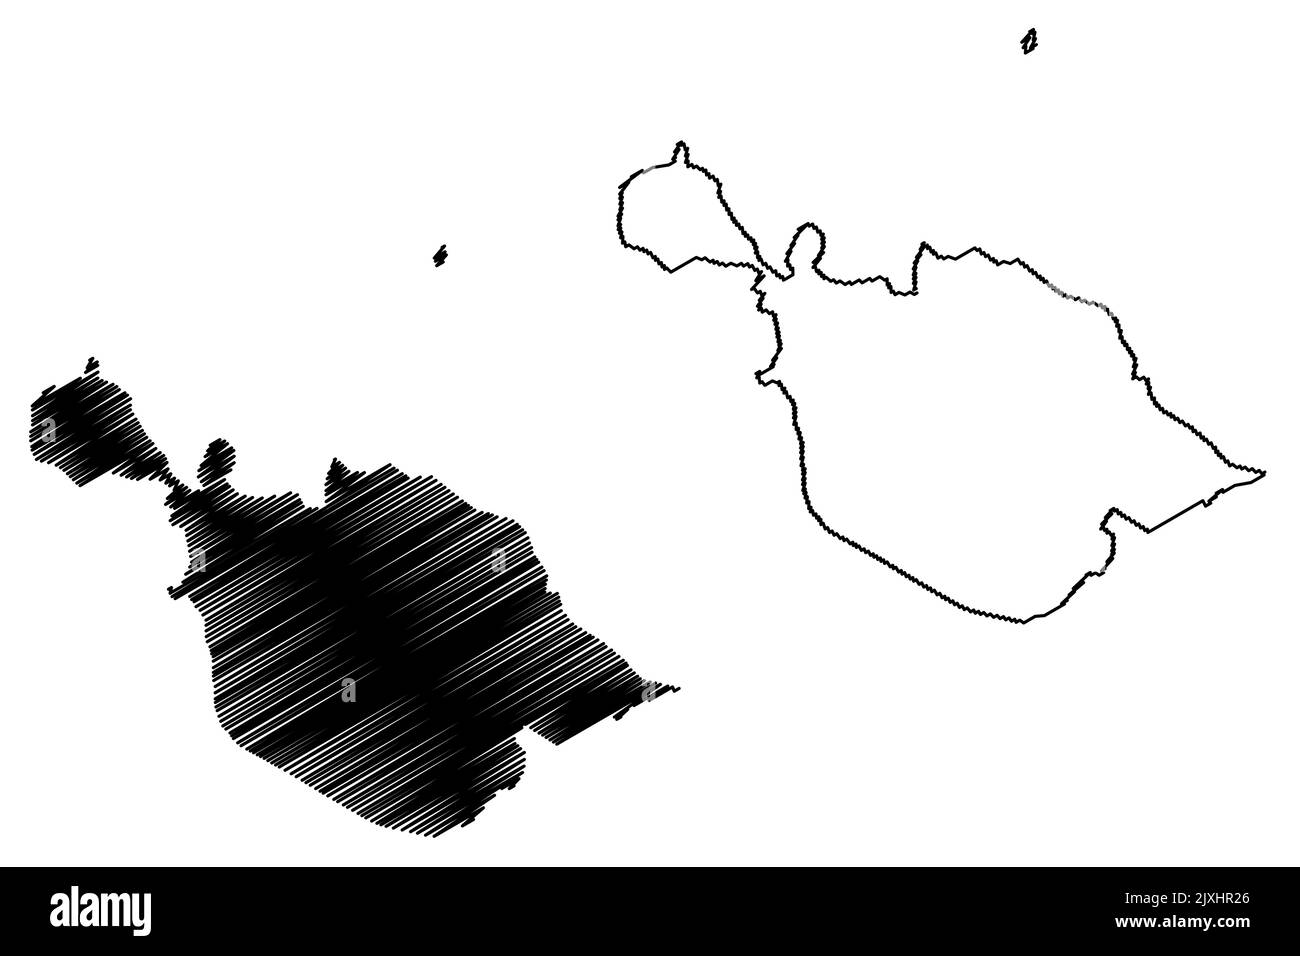 Heard and McDonald Islands ((HIMI, Commonwealth of Australia, Indian Ocean) map vector illustration, scribble sketch Territory of Heard Island and McD Stock Vector